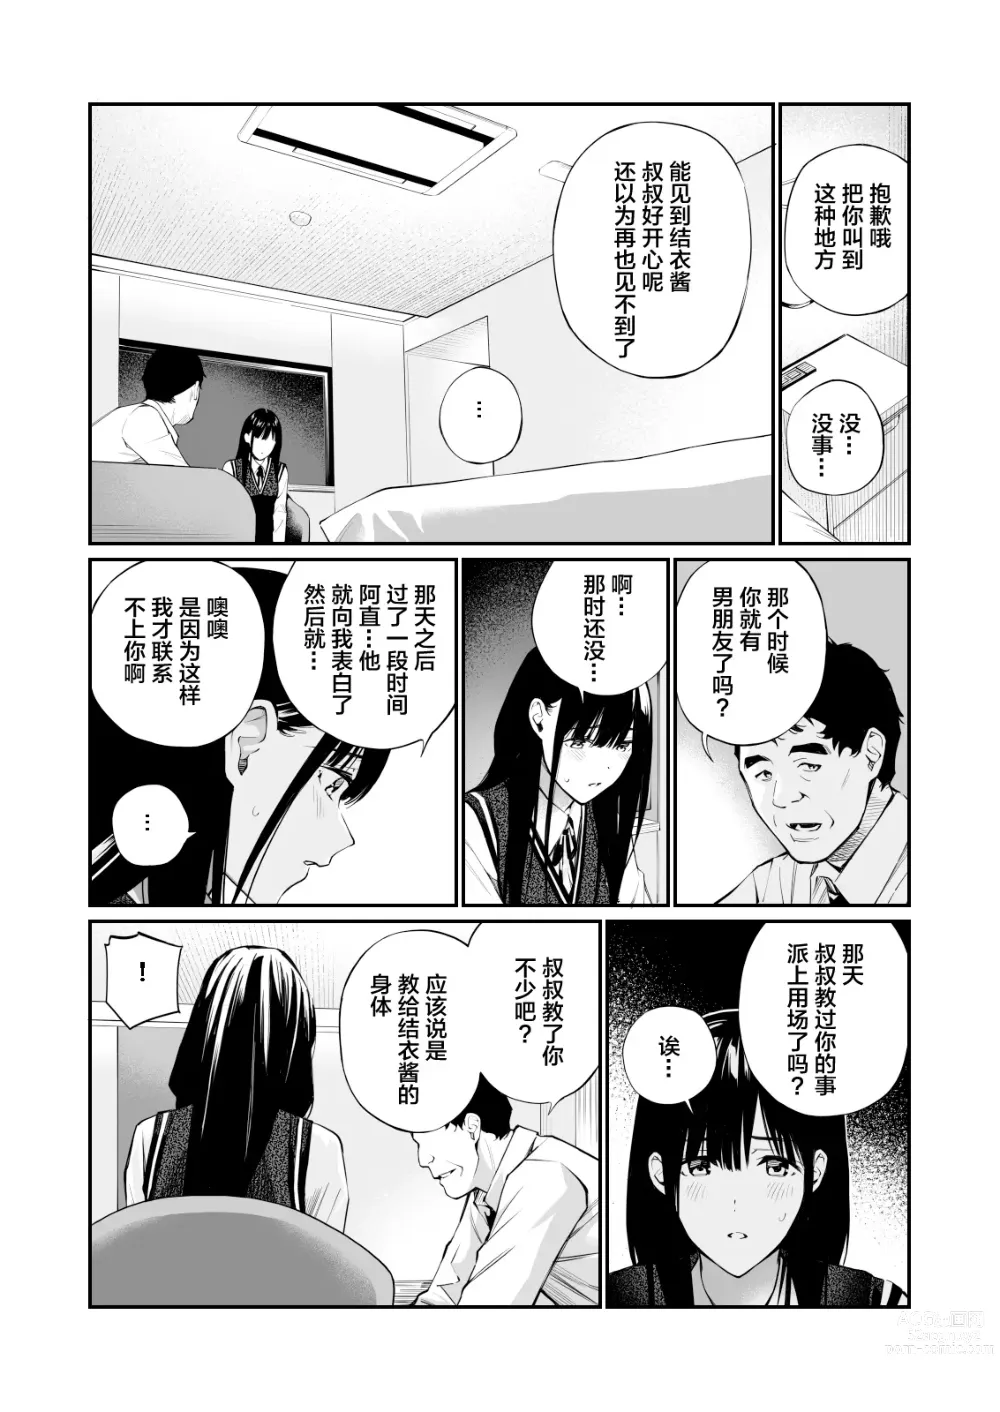 Page 26 of doujinshi 放入他所不知道的秘密。